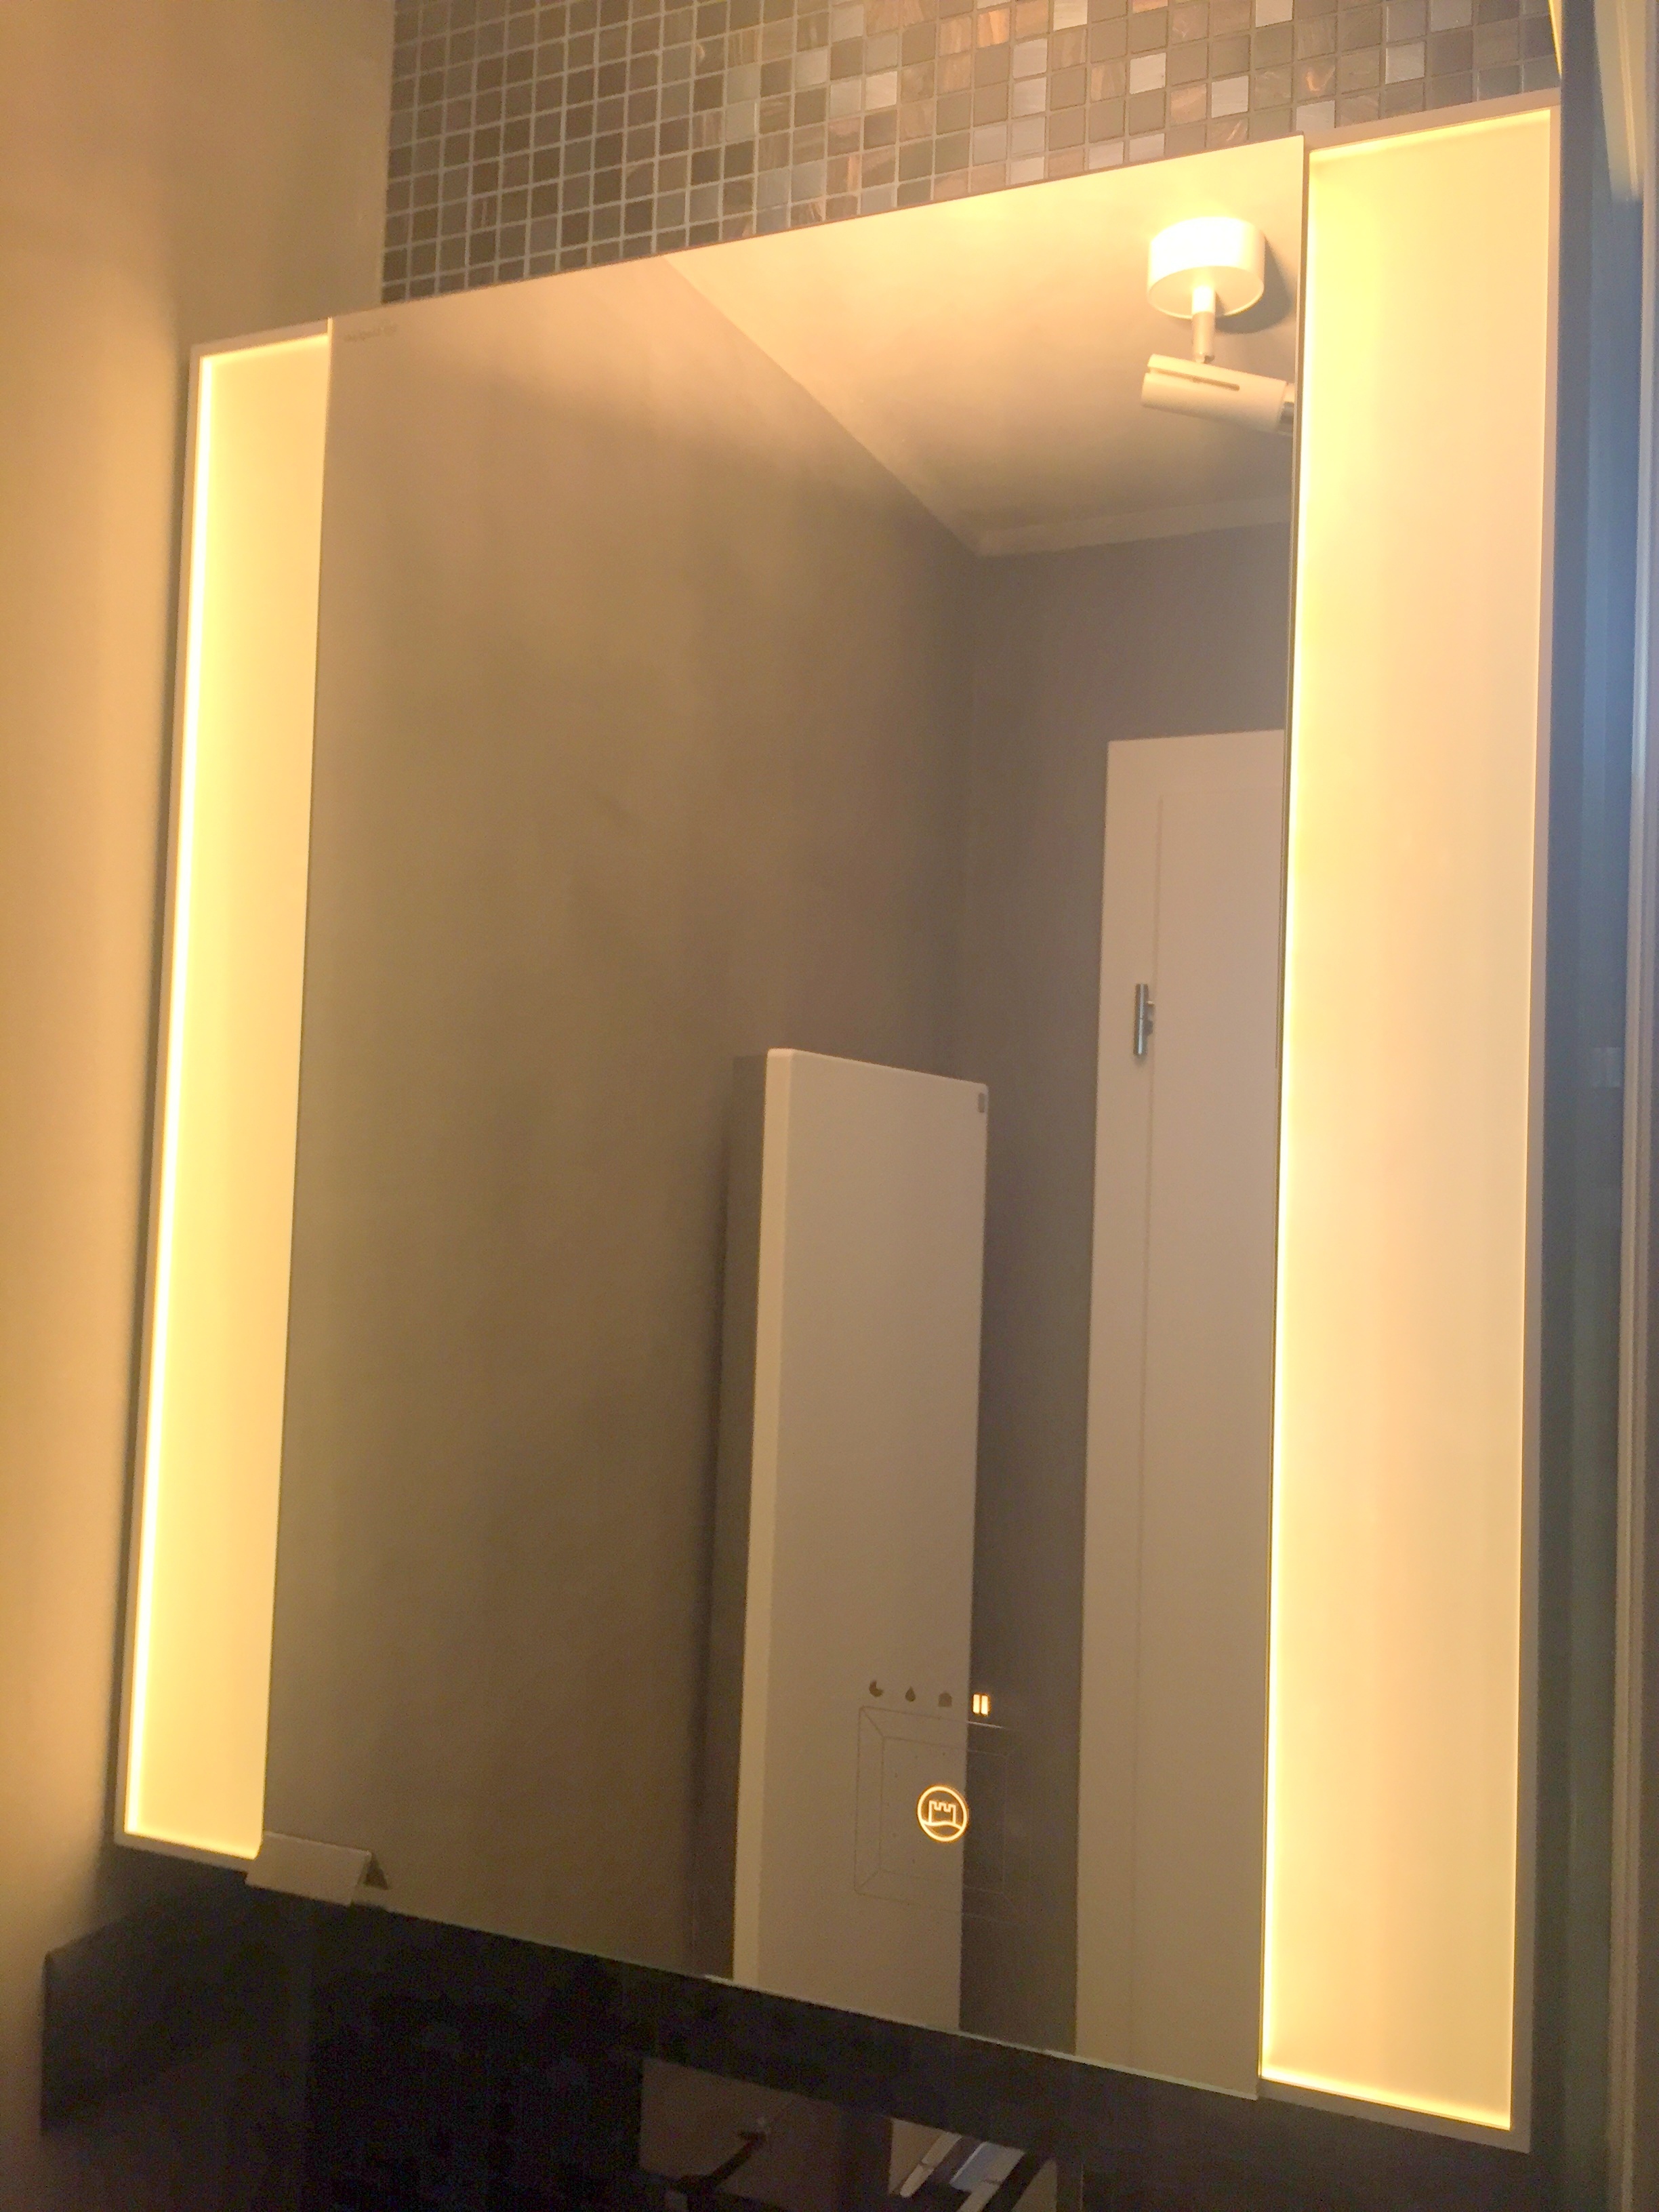 Burgbad RL40 Room Light Spiegelschrank 600x800x130-320mm Melamin Weiß; SS257R 